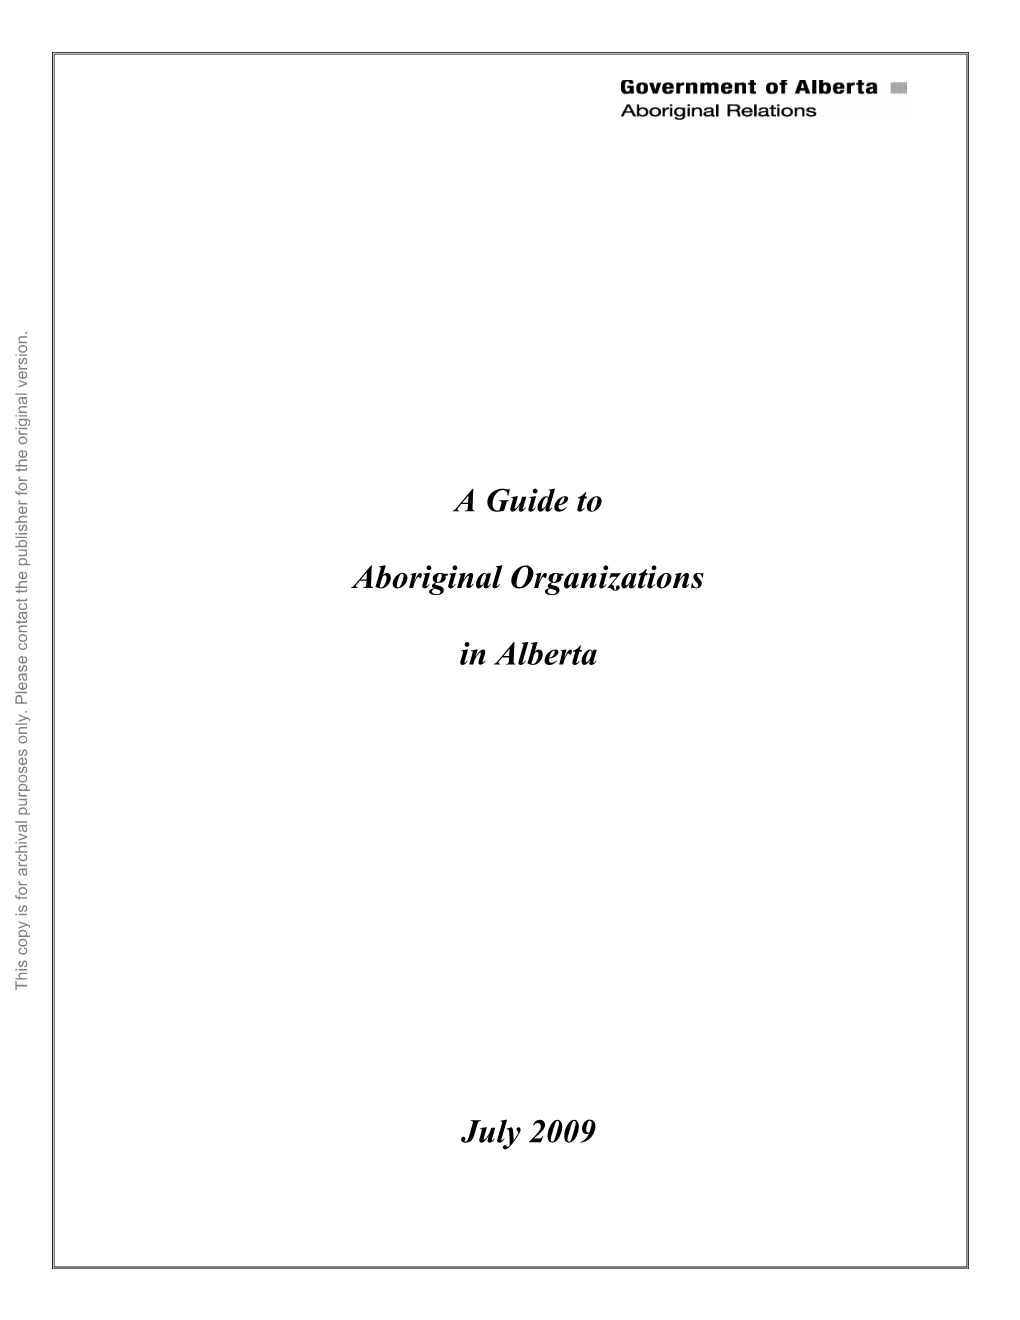 A Guide to Aboriginal Organizations in Alberta July 2009